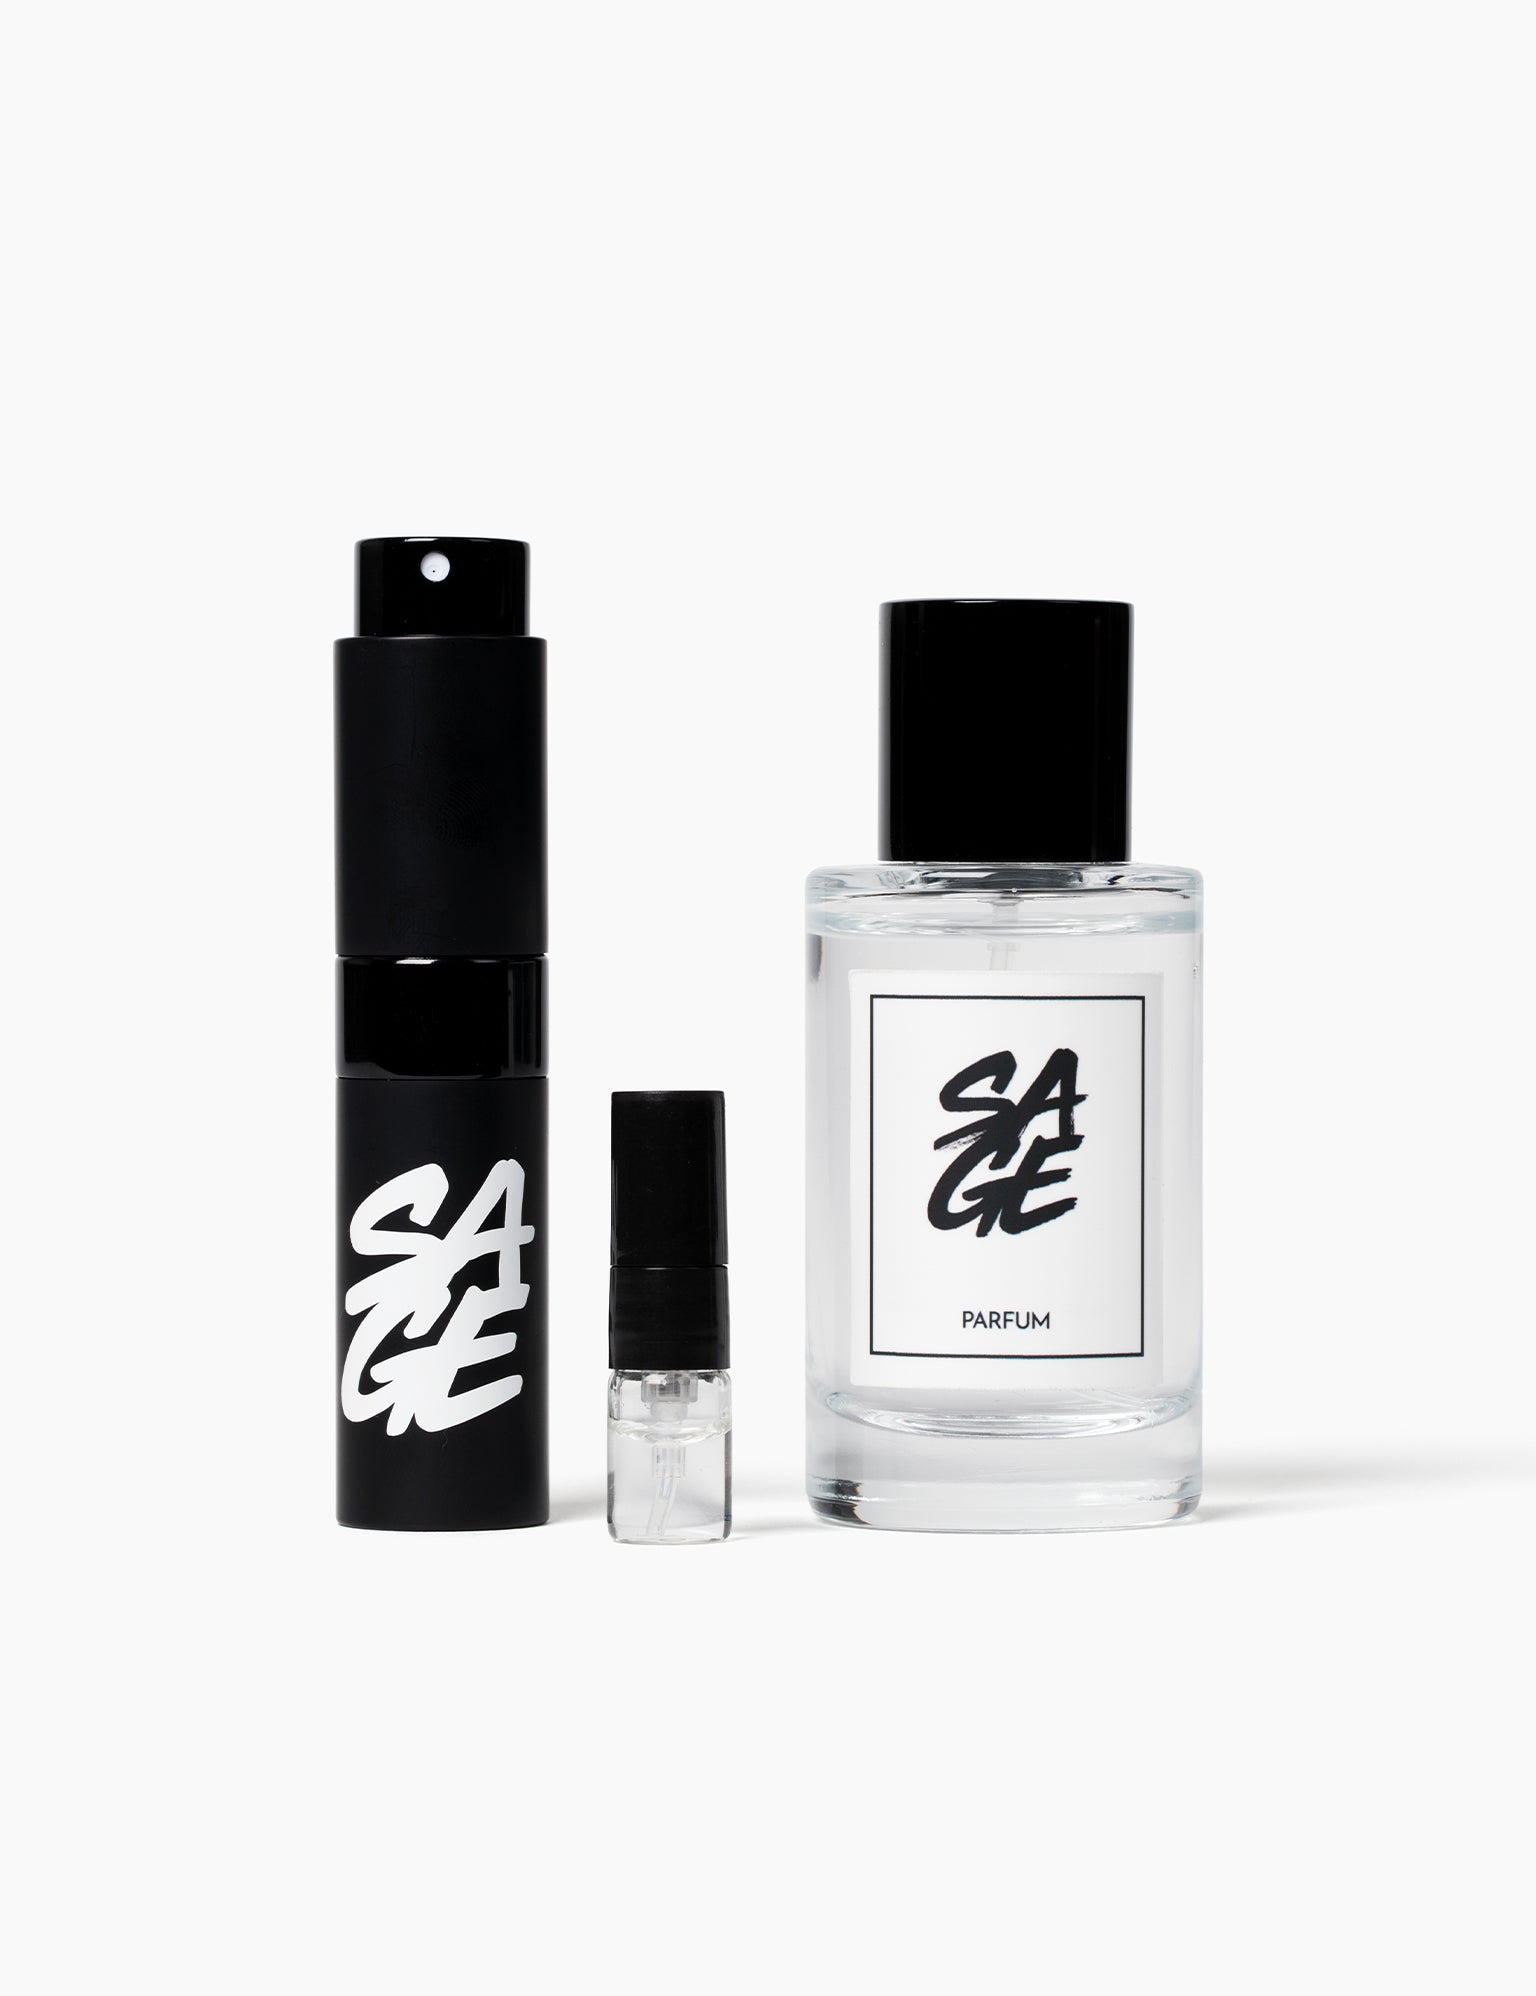 Eucalyptus & Peppermint Perfume - The Sage & Co.